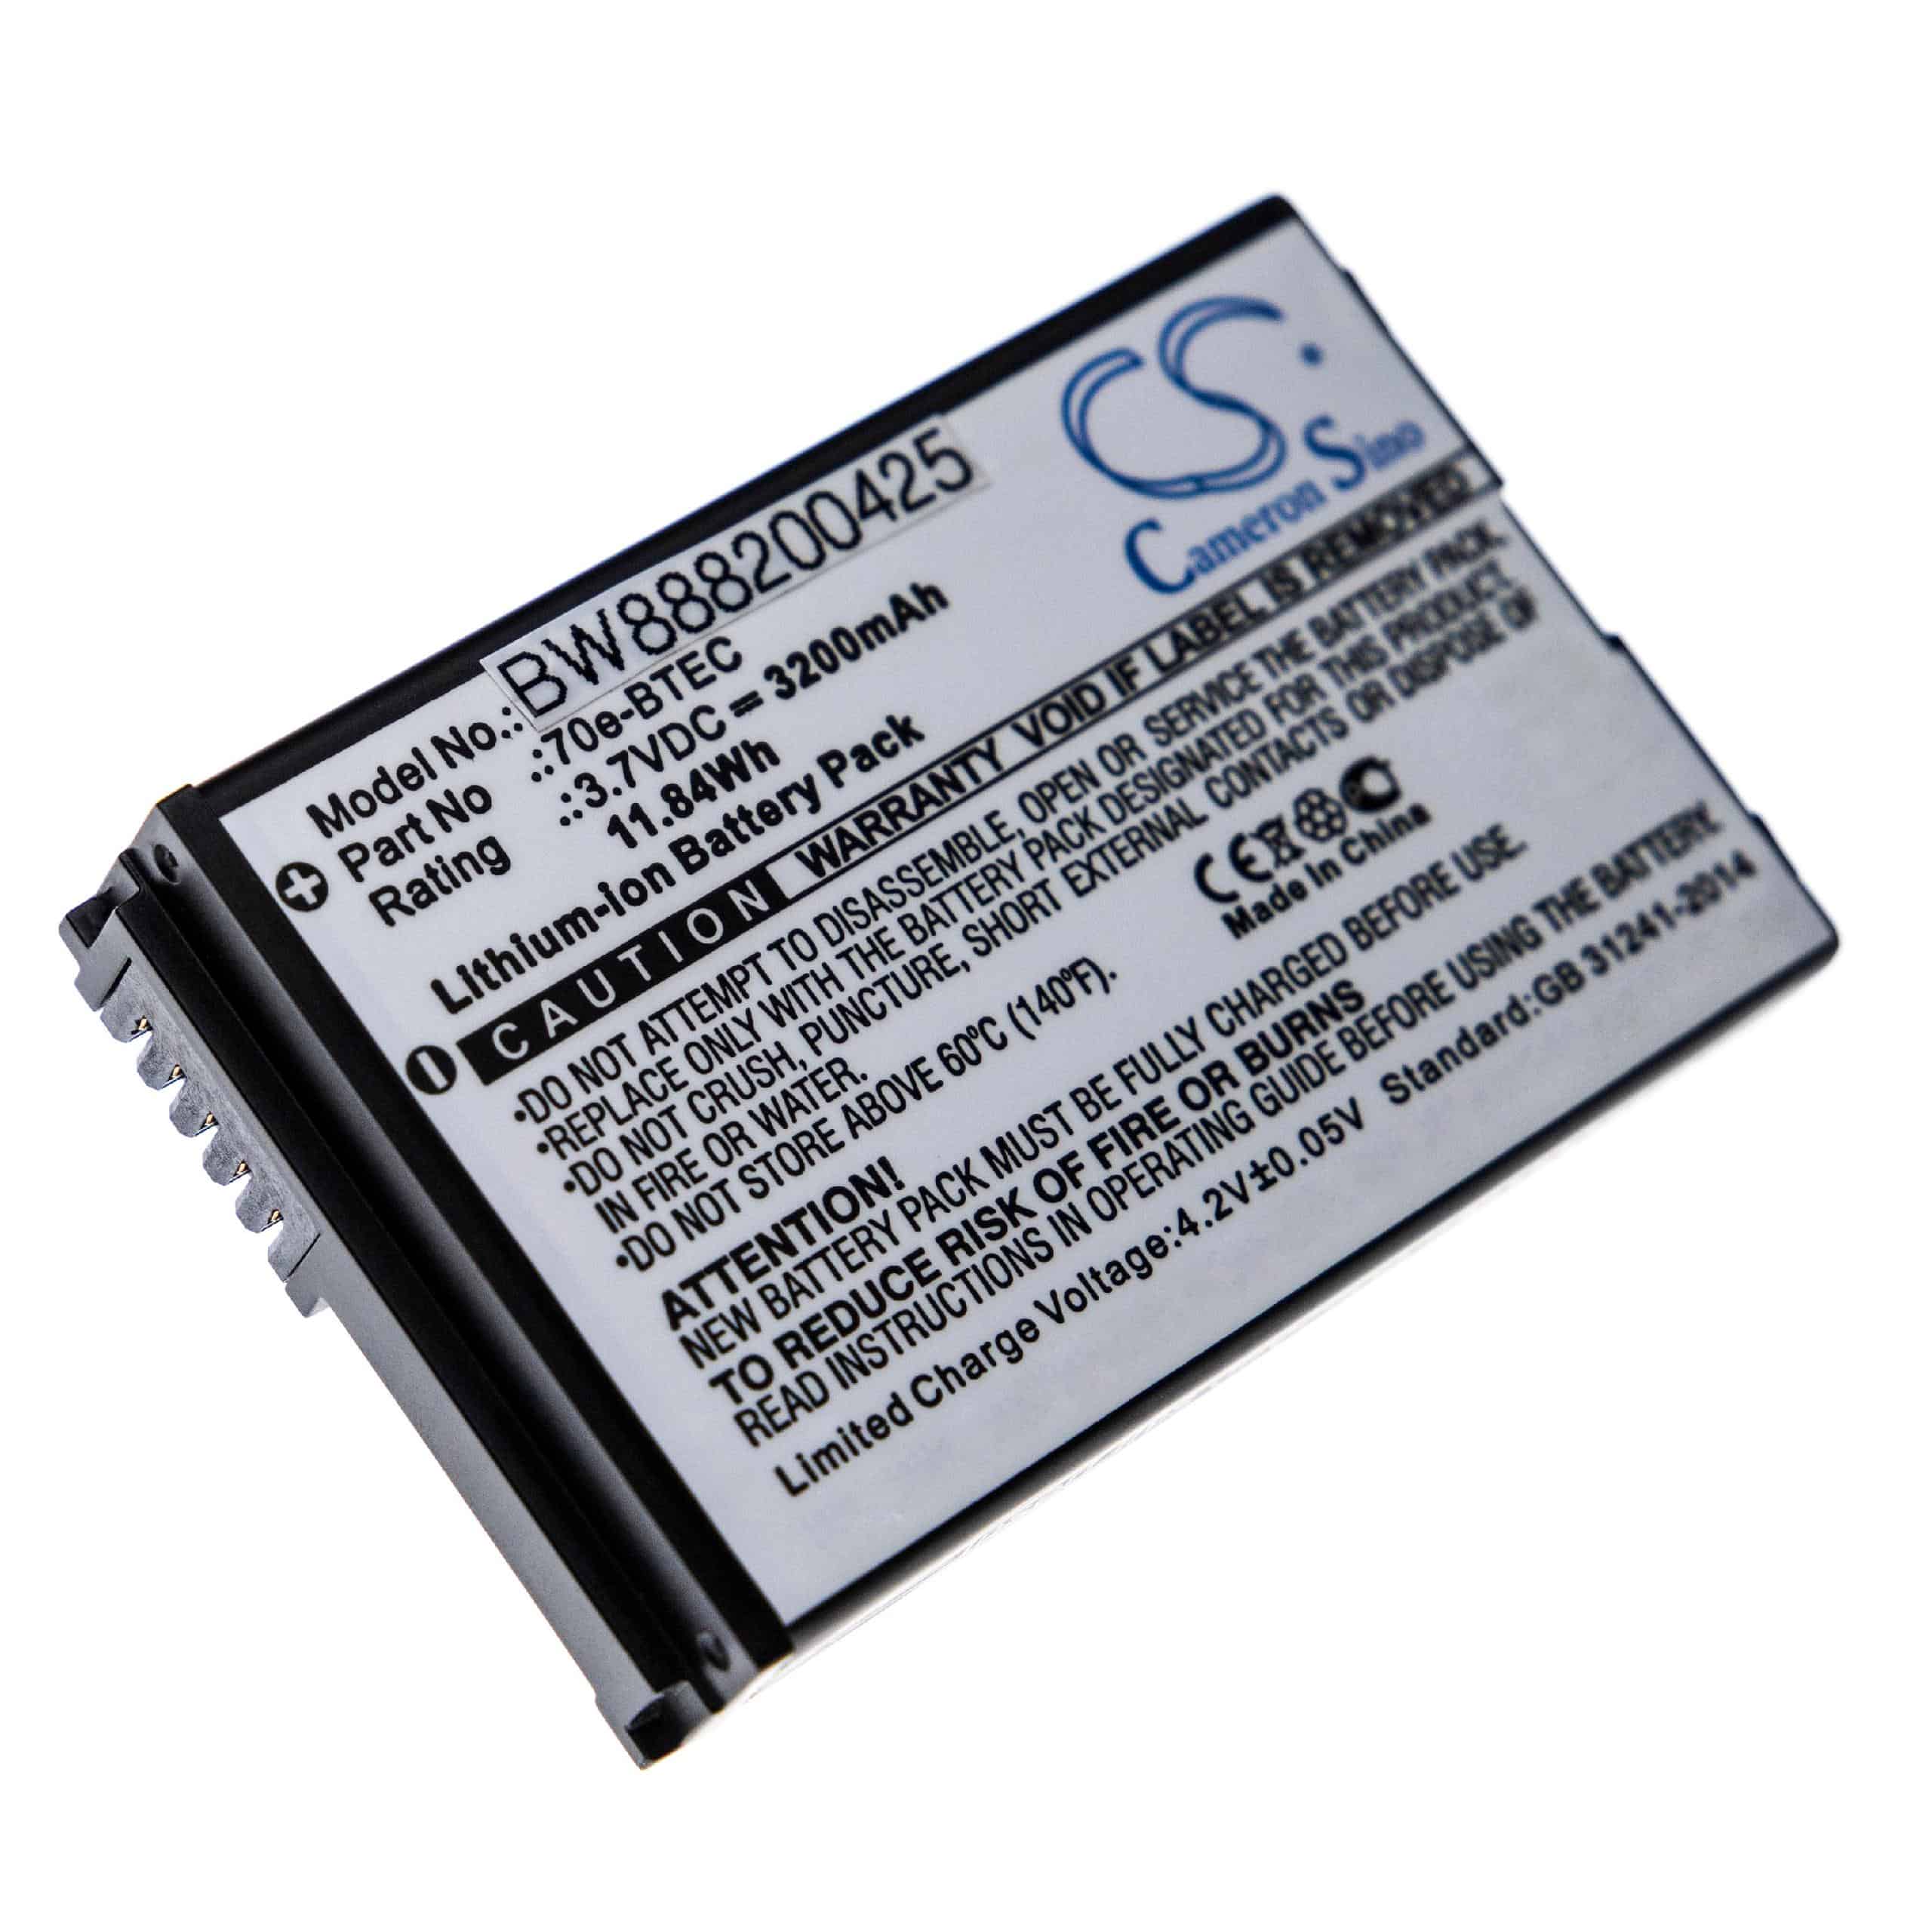 Batteria per computer portatile scanner sostituisce Honeywell 60S-BATT-1 Honeywell - 3200mAh 3,7V Li-Ion